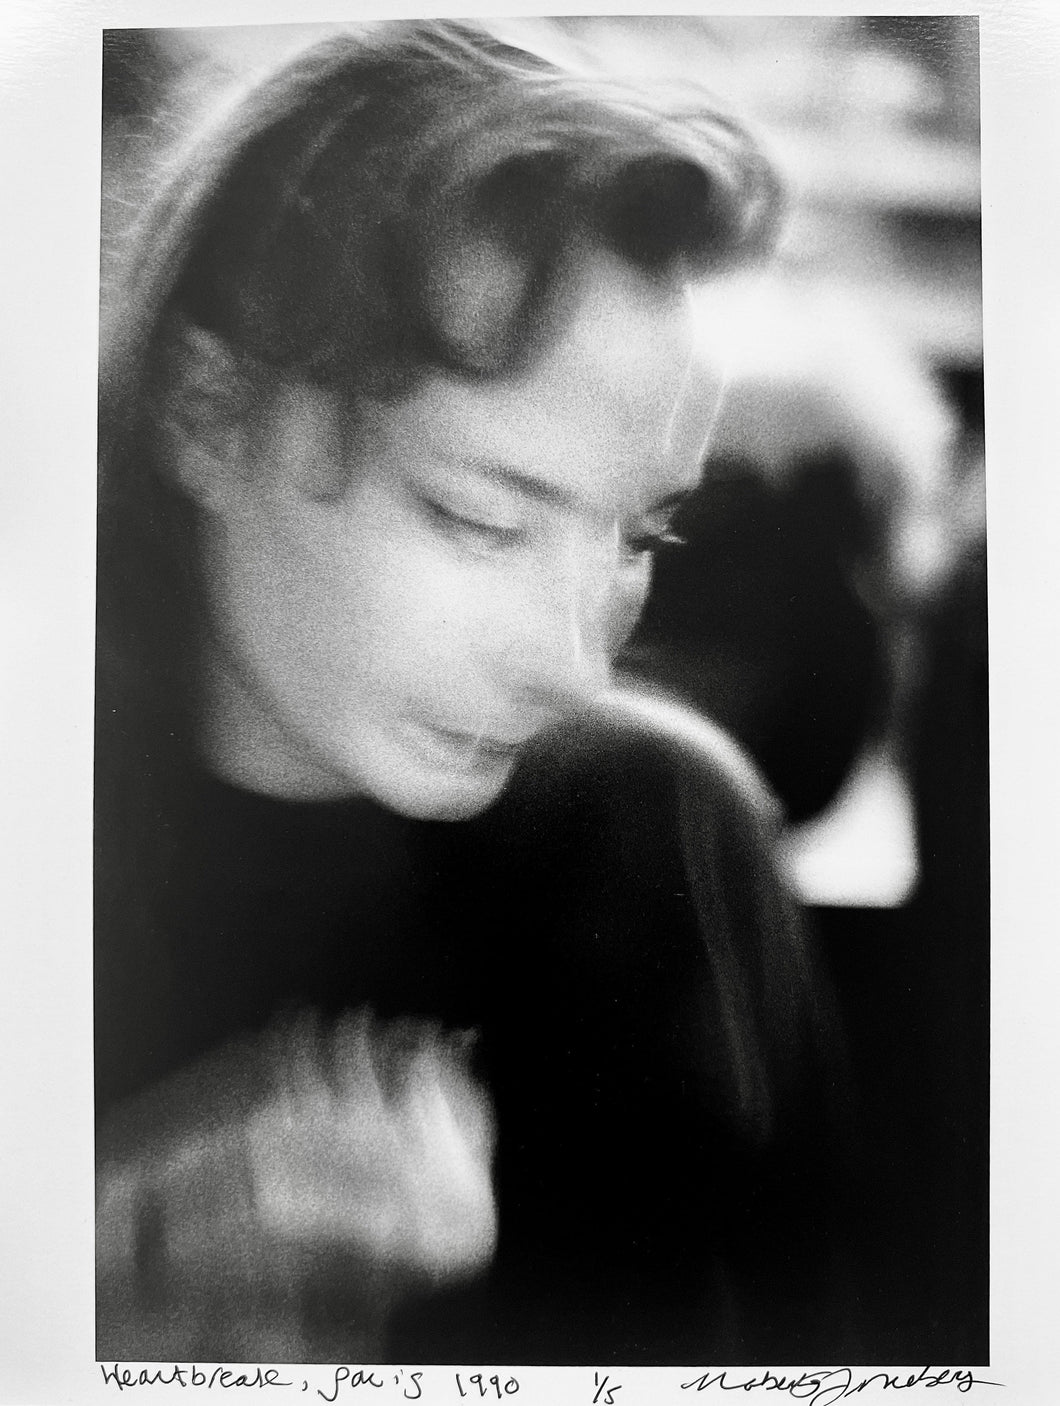 Heartbreak, 1990 by Roberta Fineberg, Black-and-White Figurative Photography, Paris, France